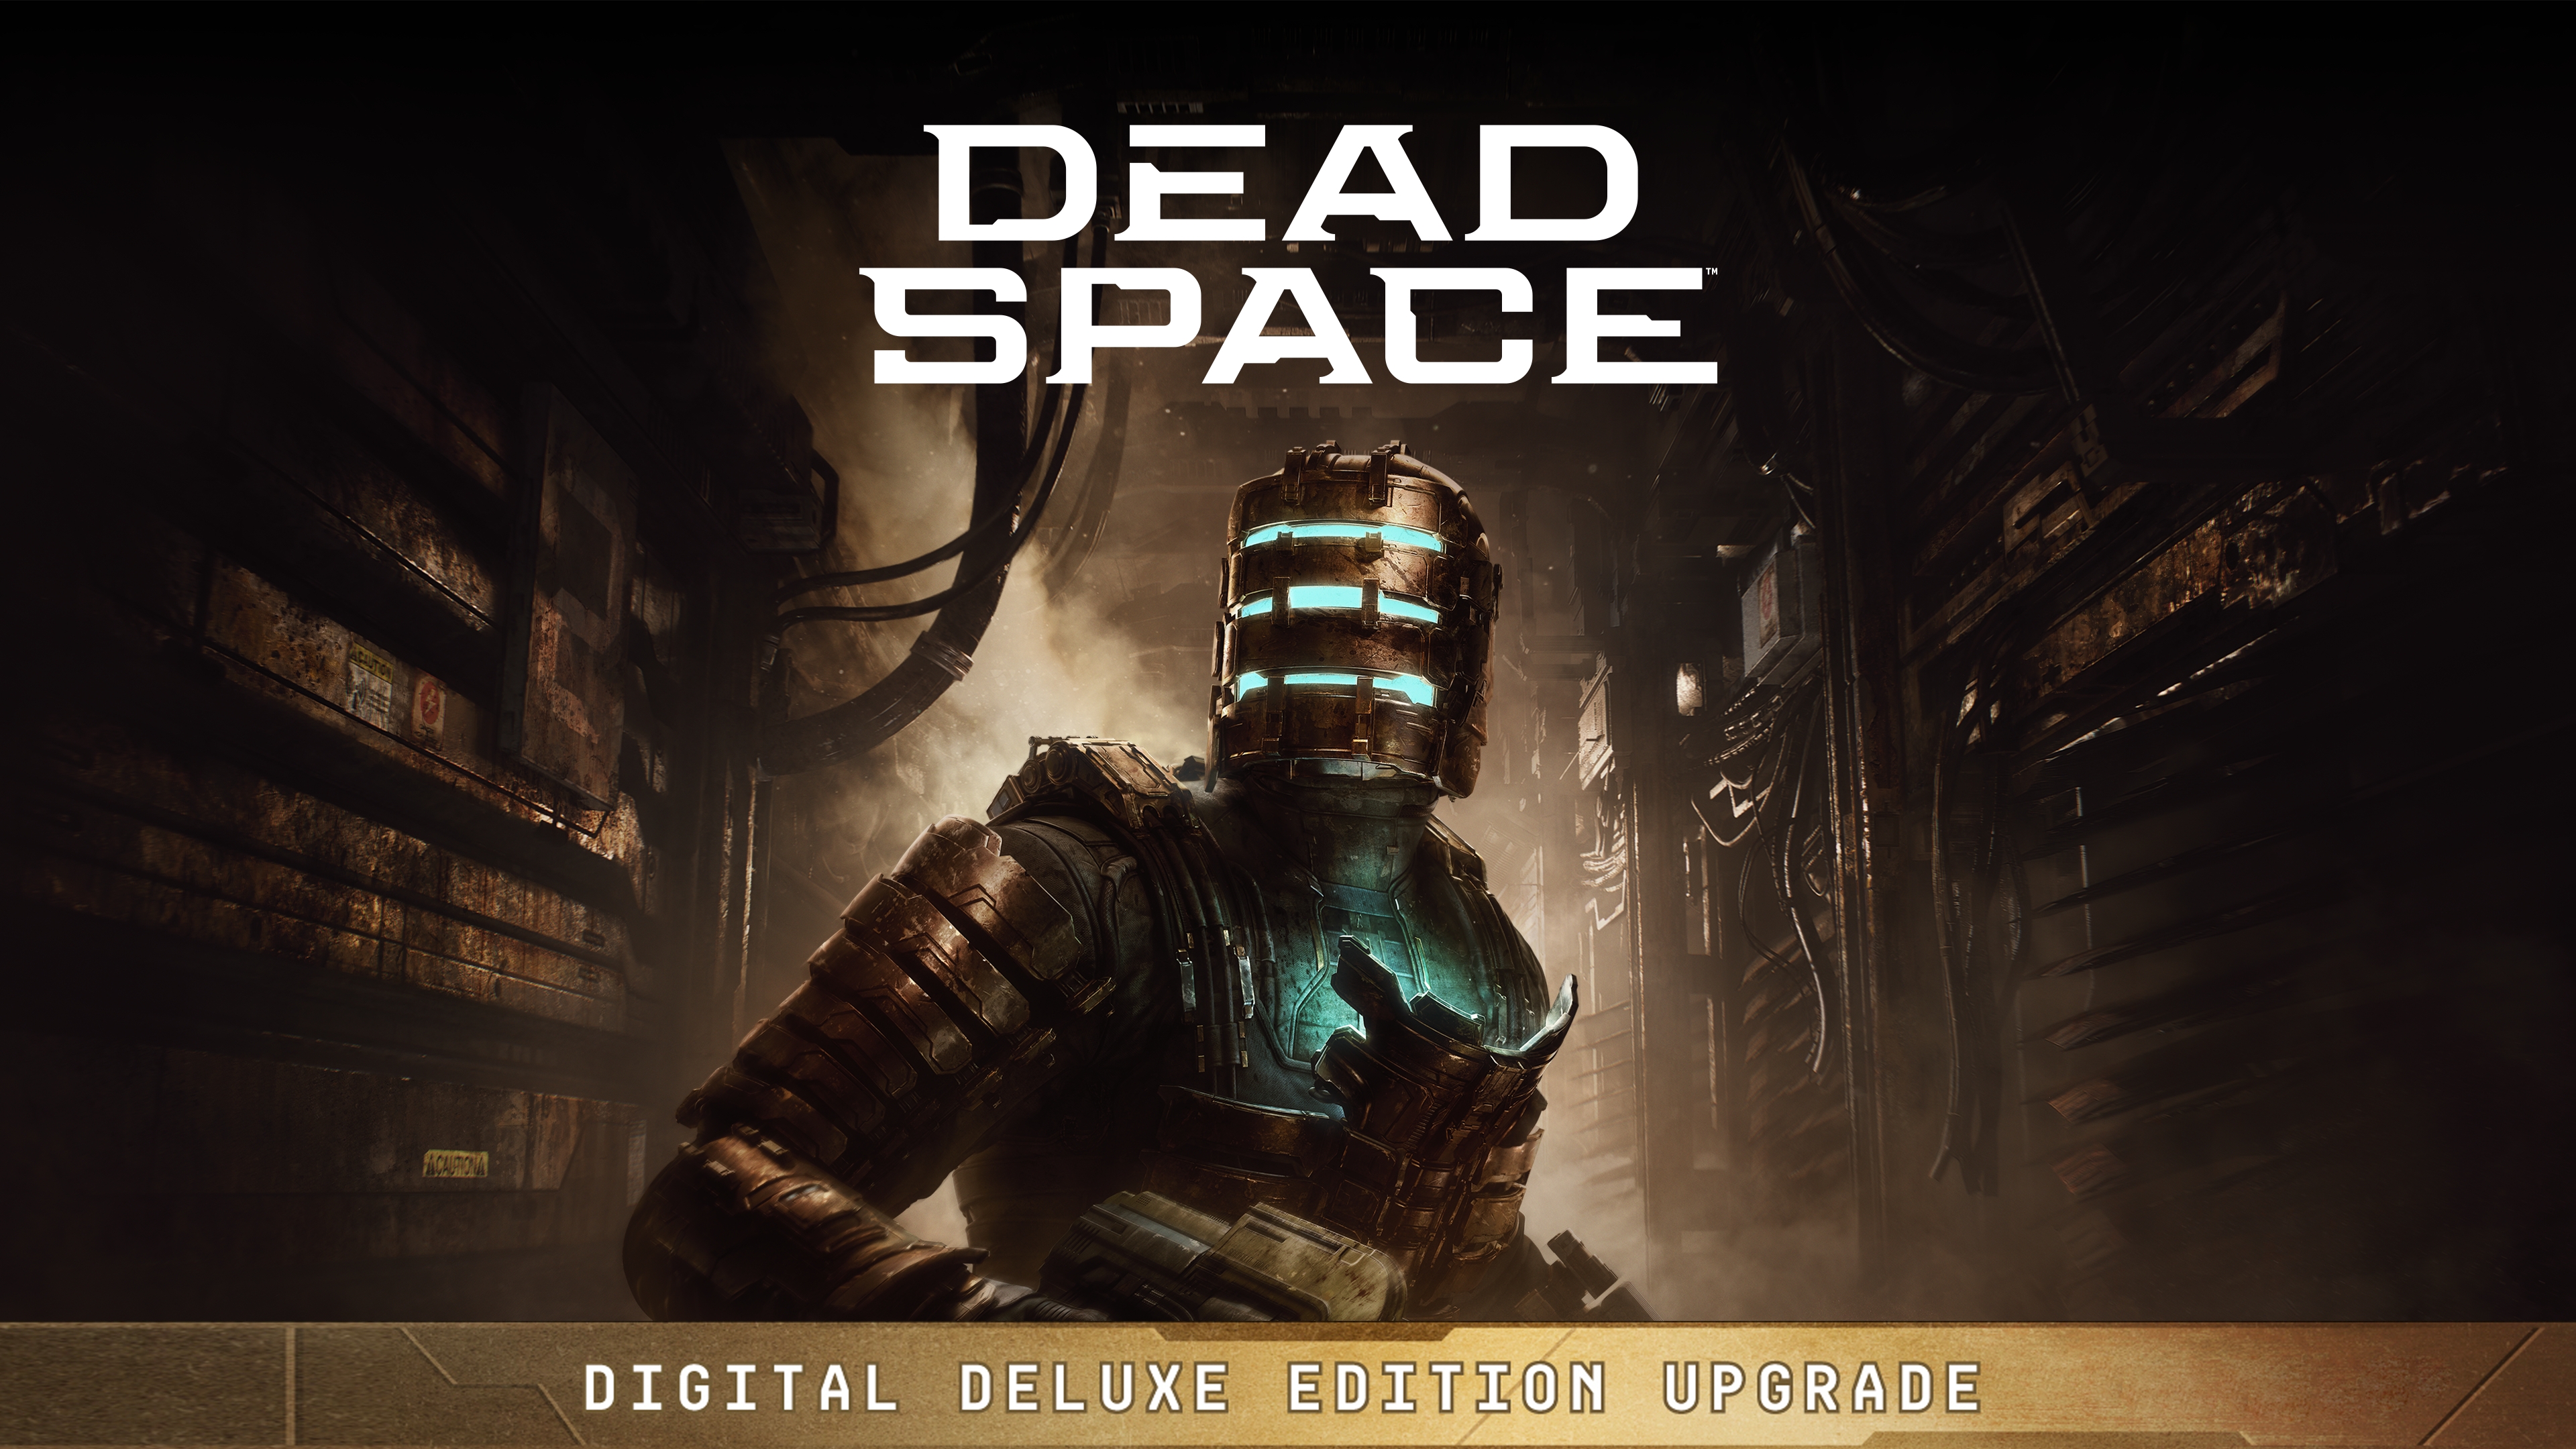 Dead Space Console-Specific Suits as DLC